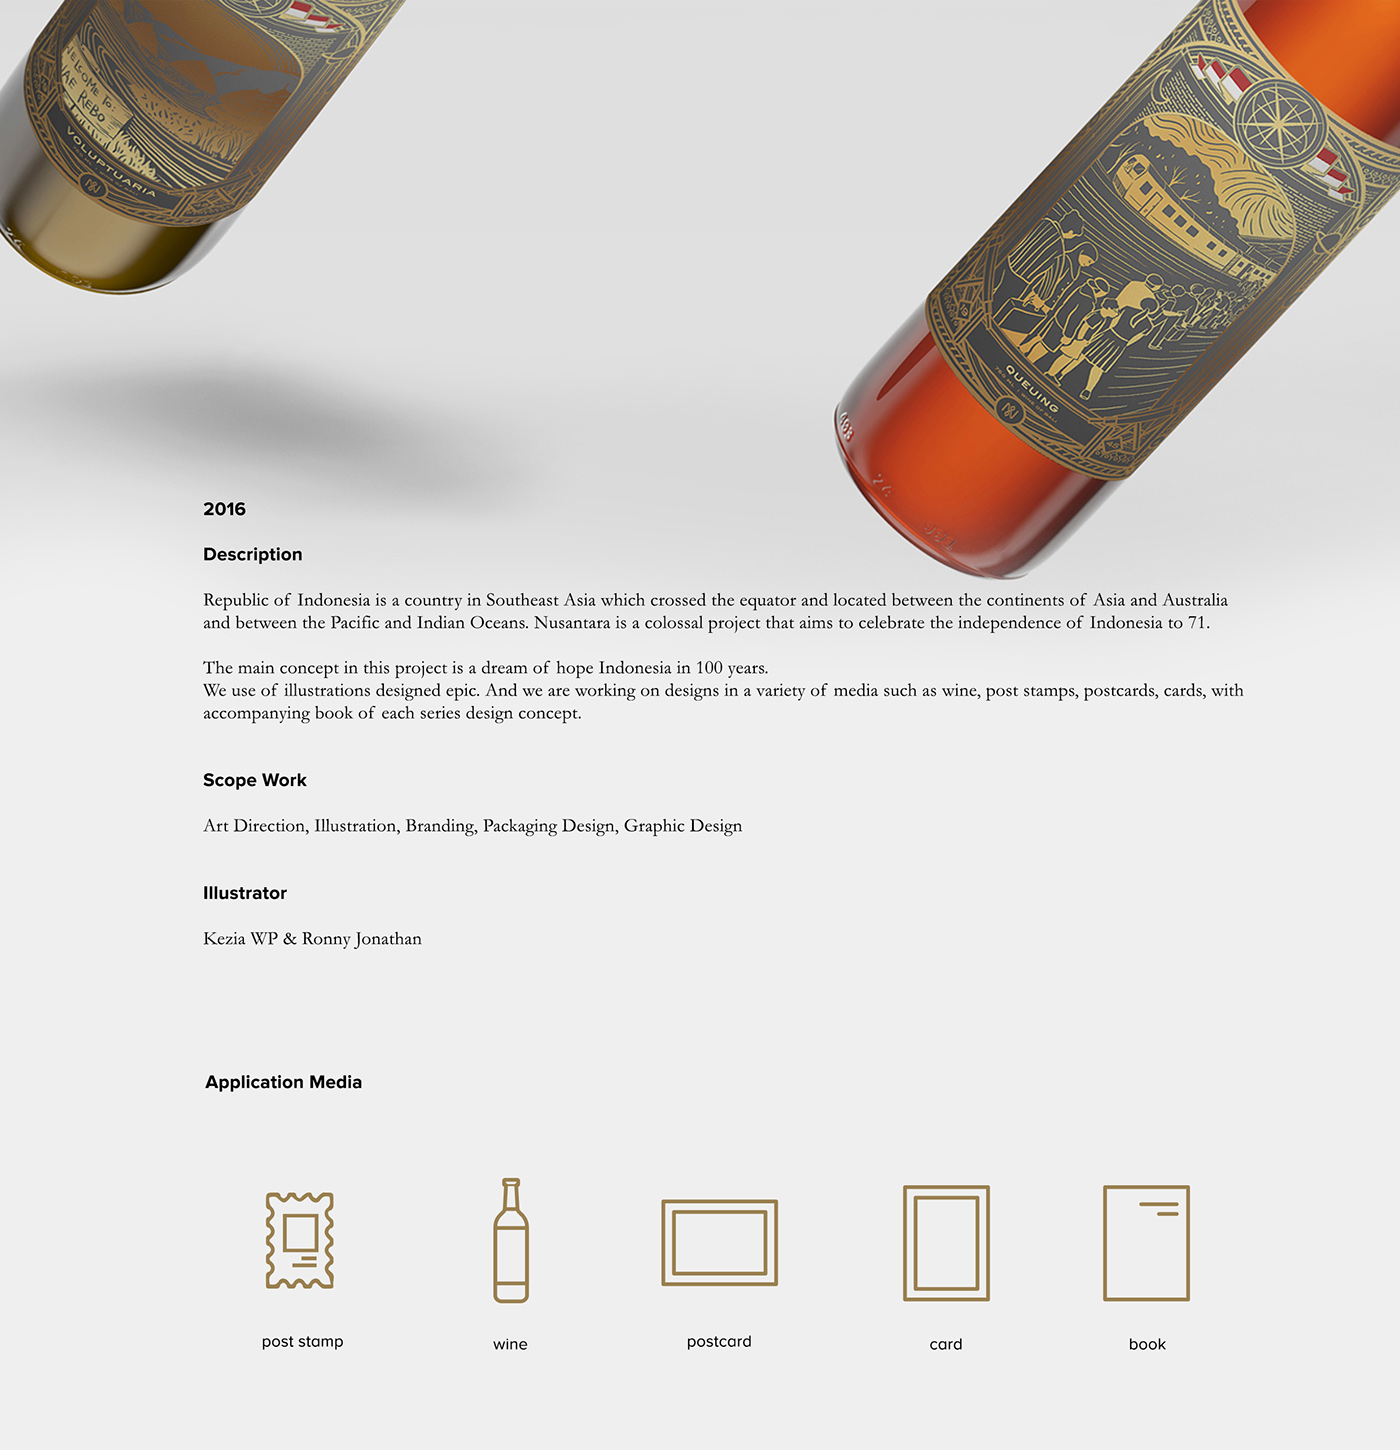 indonesia nusantara design winelabel wine Label Packaging poststamp